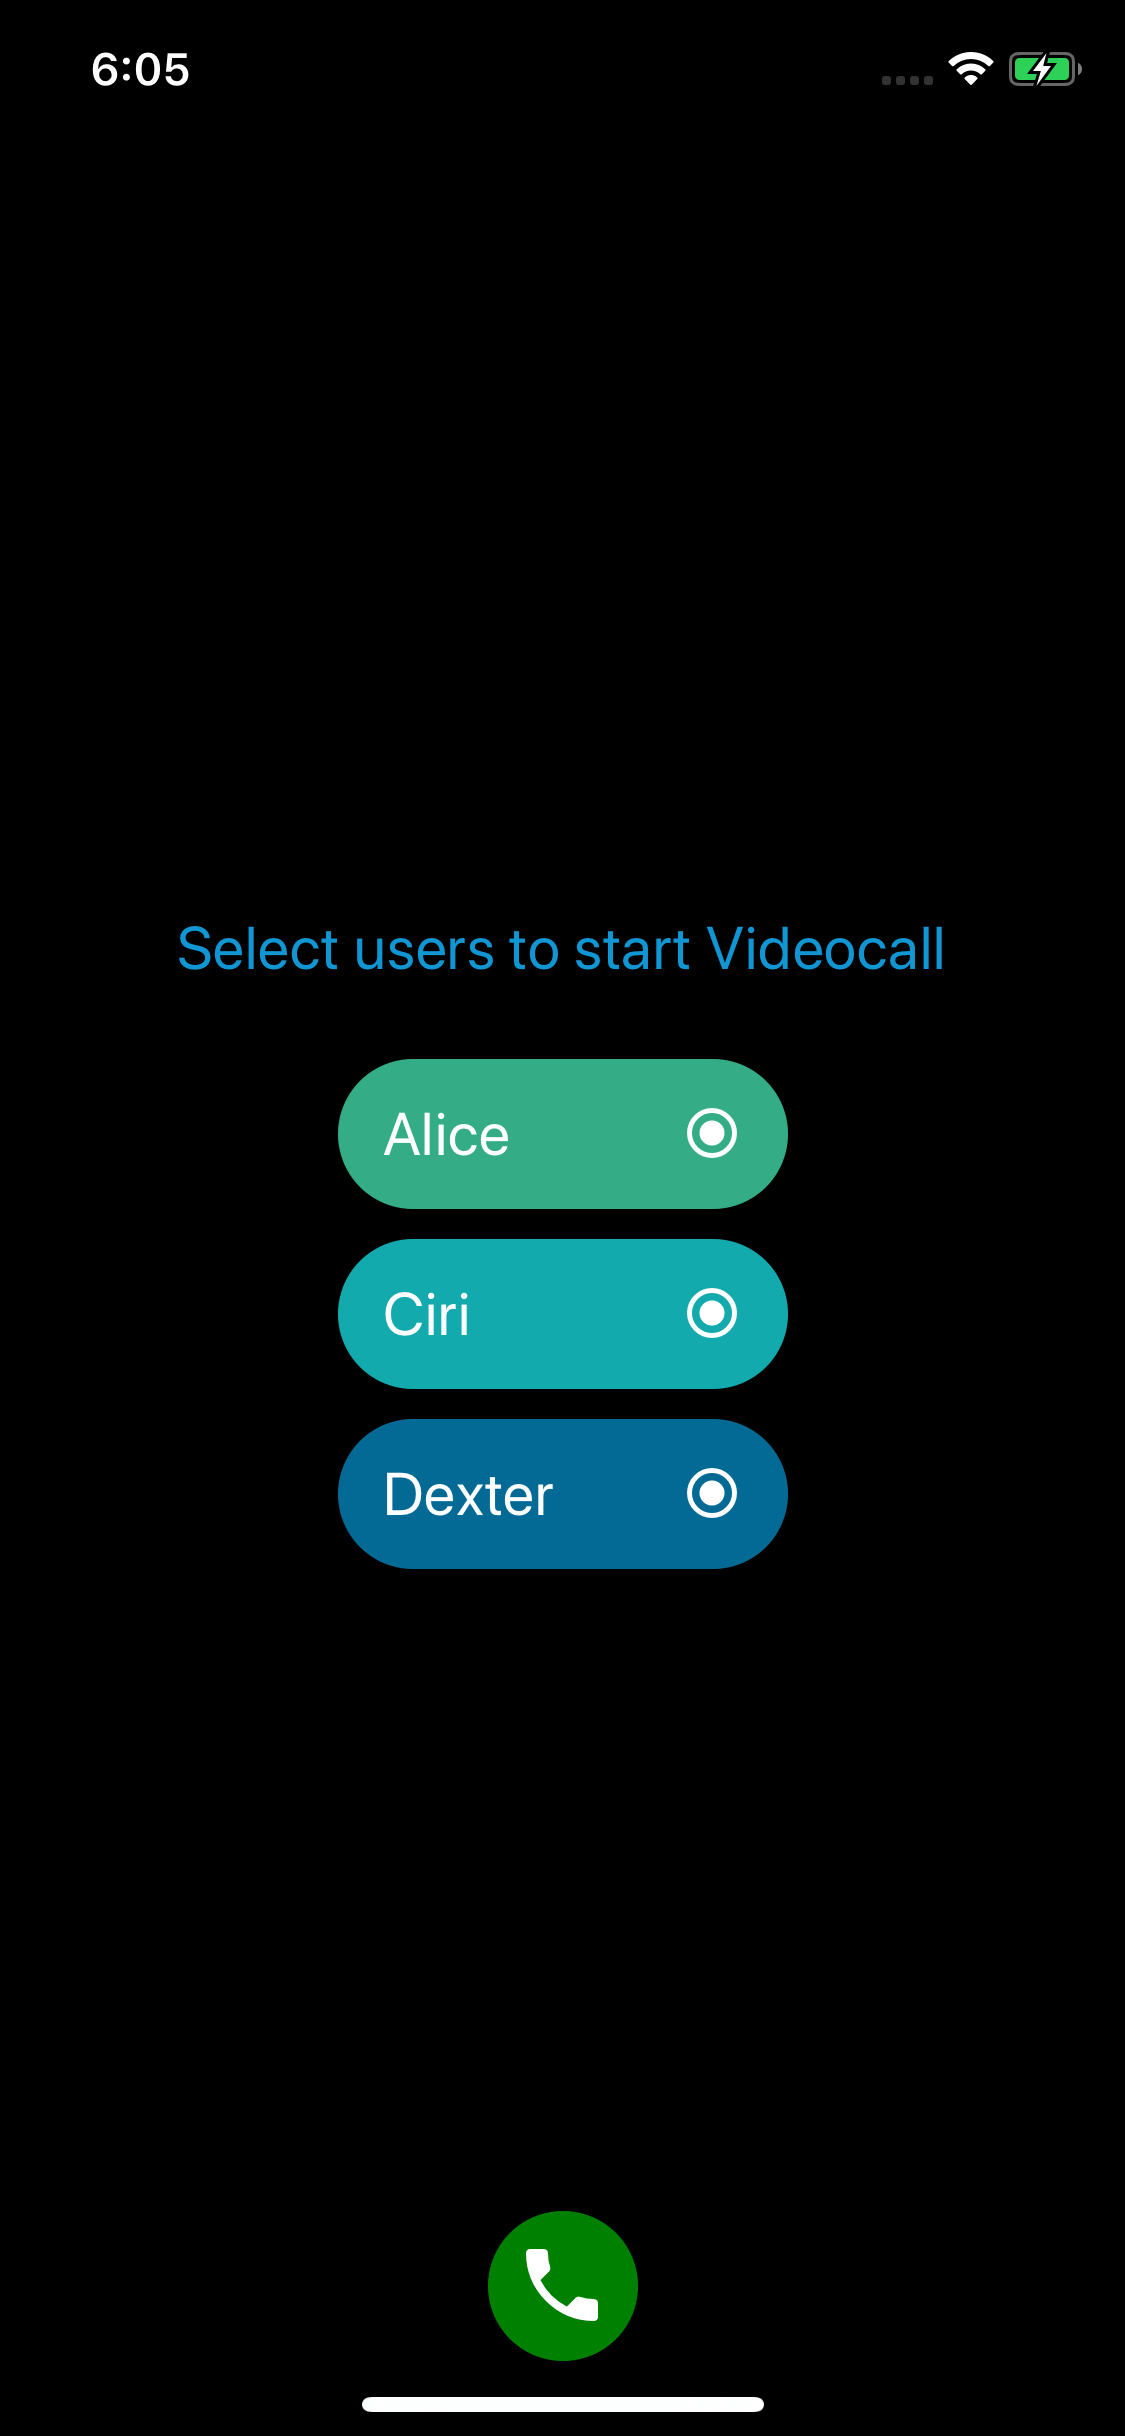 Cordova video chat code sample, select